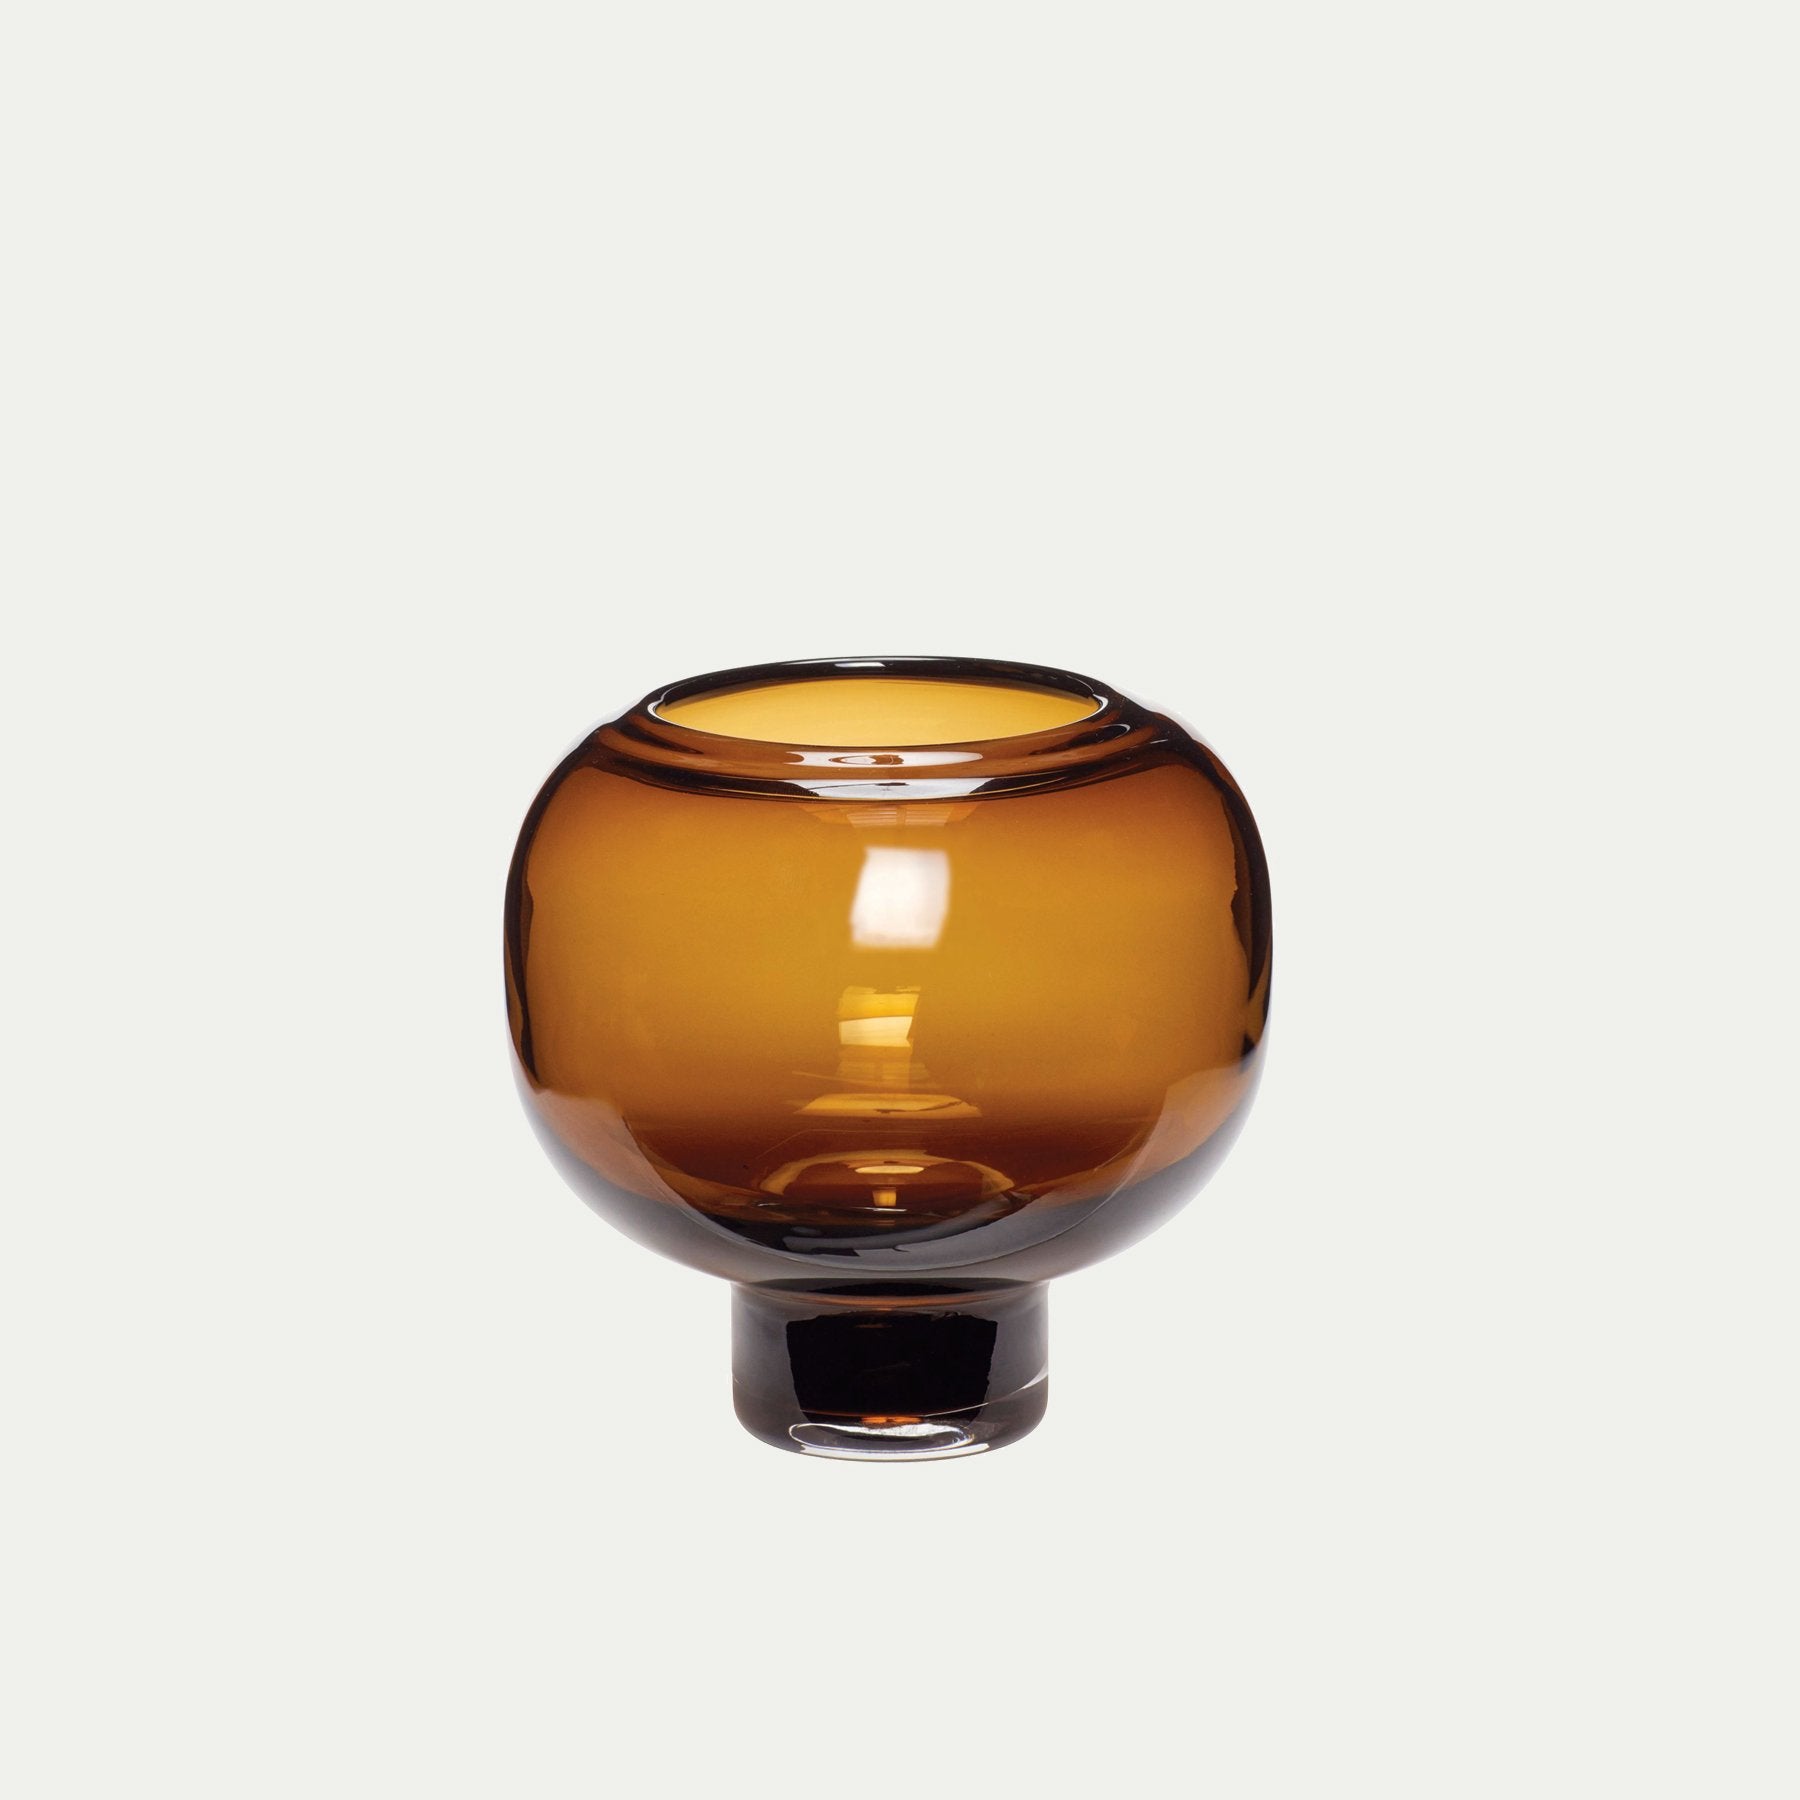 Hubsch Interior Nordic designer fish-bowl style cocoon vase in brown glass on white background